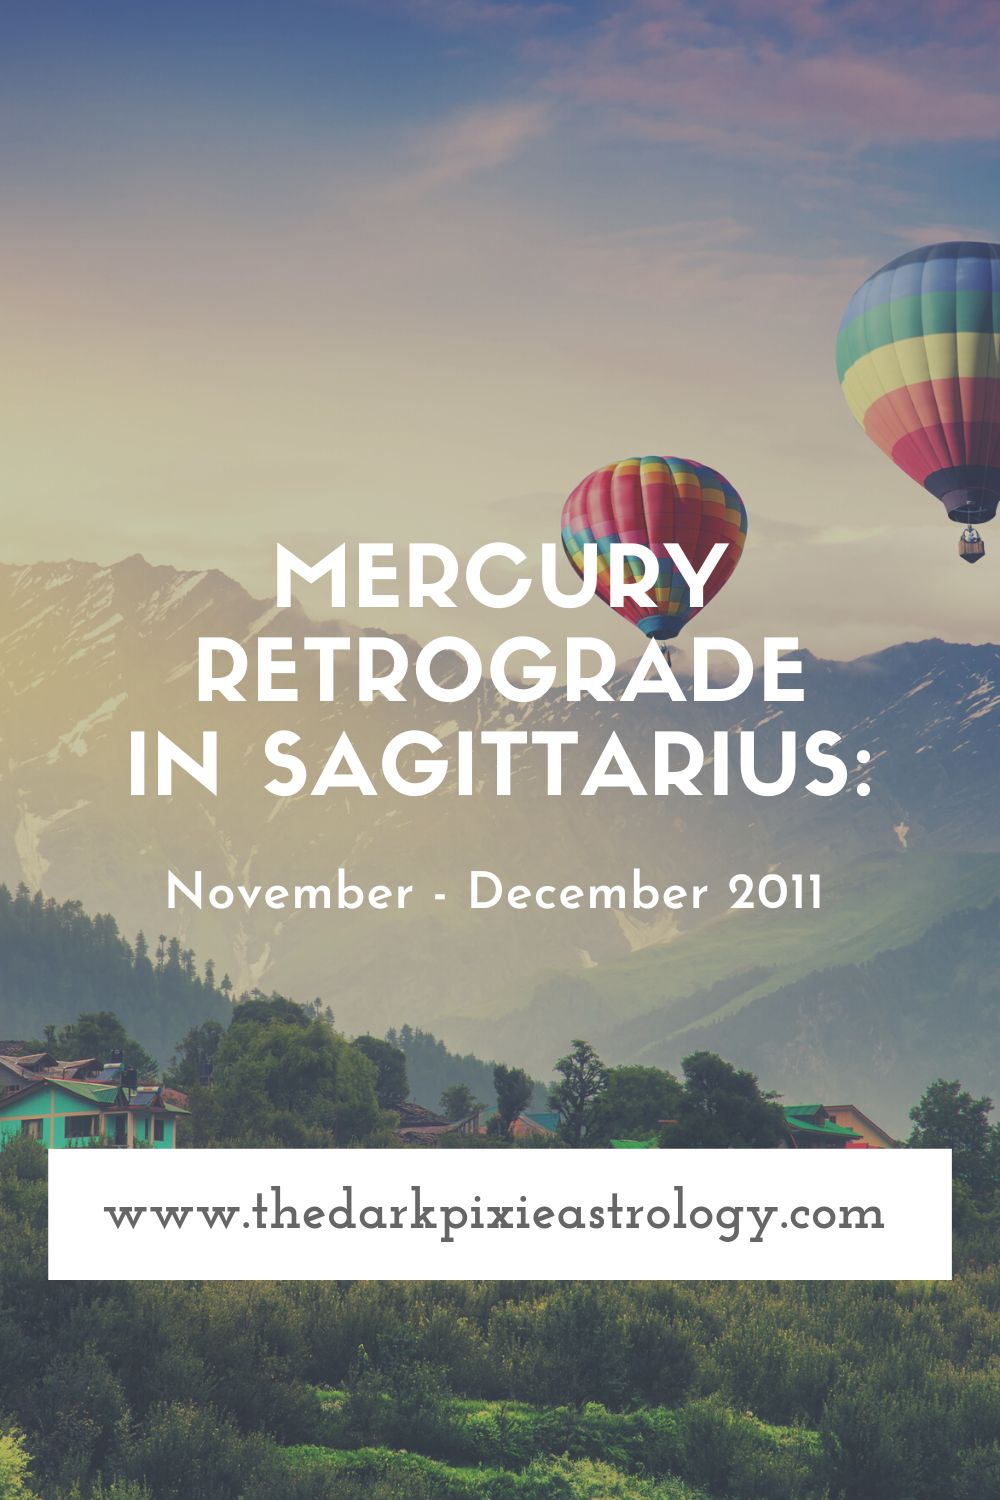 Mercury Retrograde in Sagittarius: November - December 2011 - The Dark Pixie Astrology